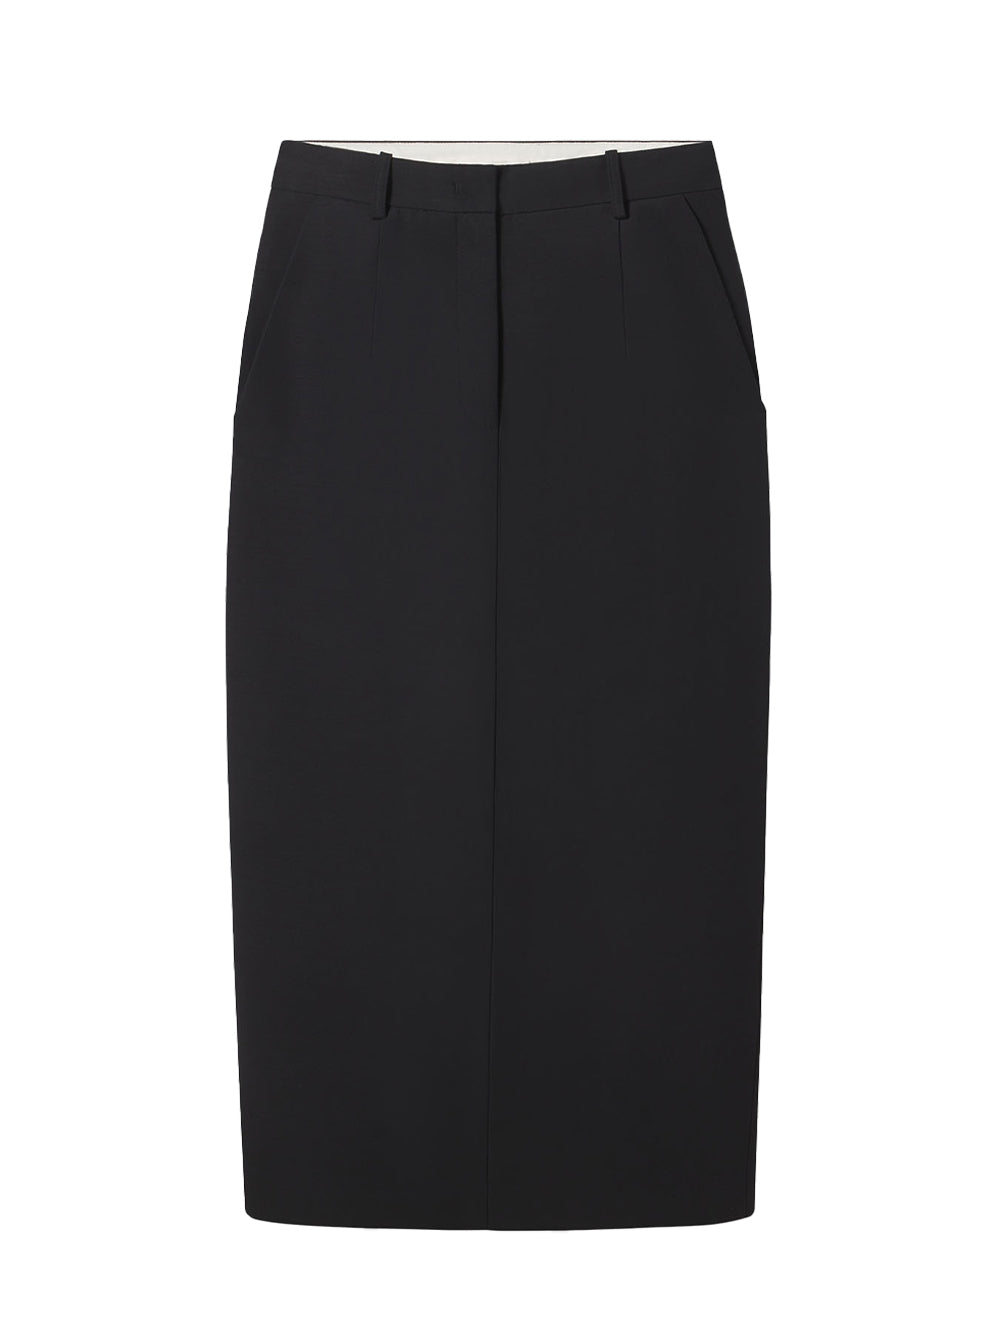 Tailored Pencil Skirt Black